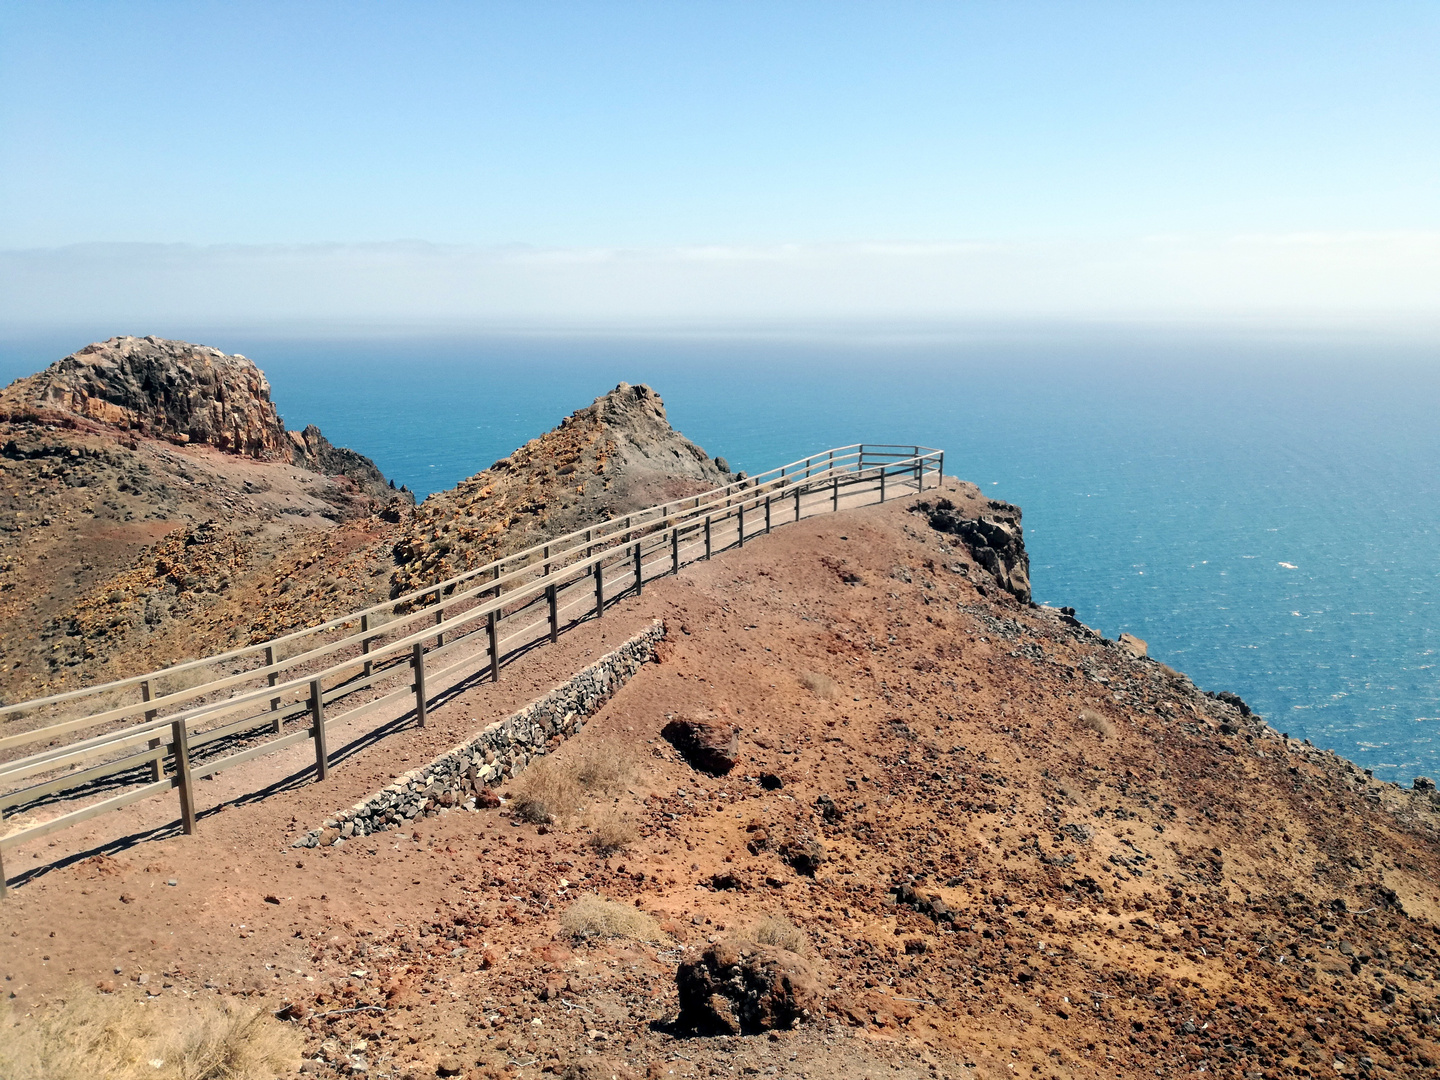 Phare de Punta Entallada, Fuerteventura